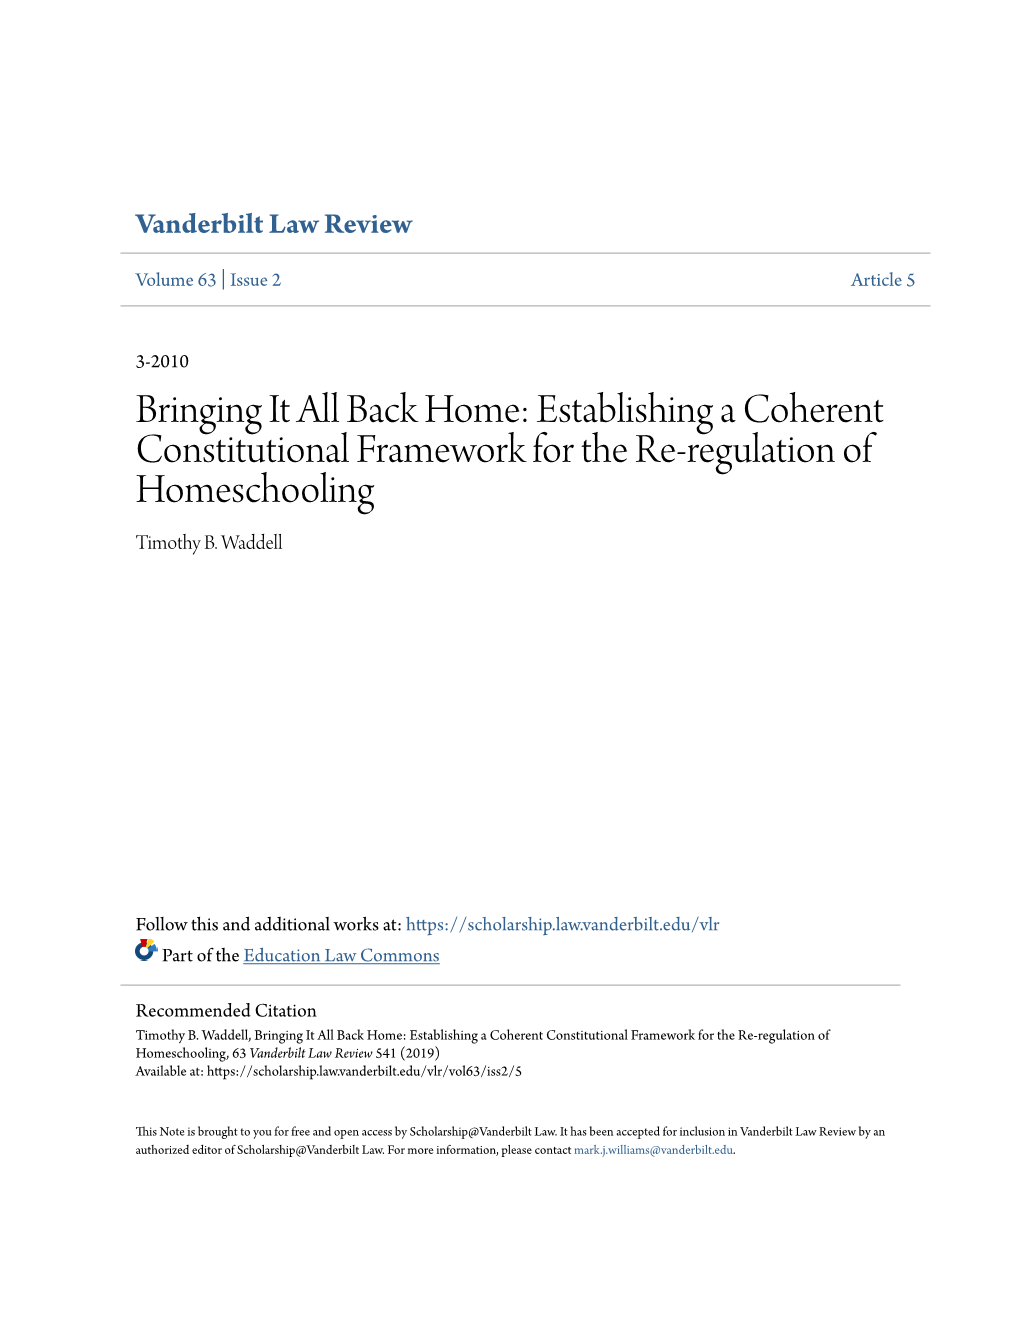 Establishing a Coherent Constitutional Framework for the Re-Regulation of Homeschooling Timothy B